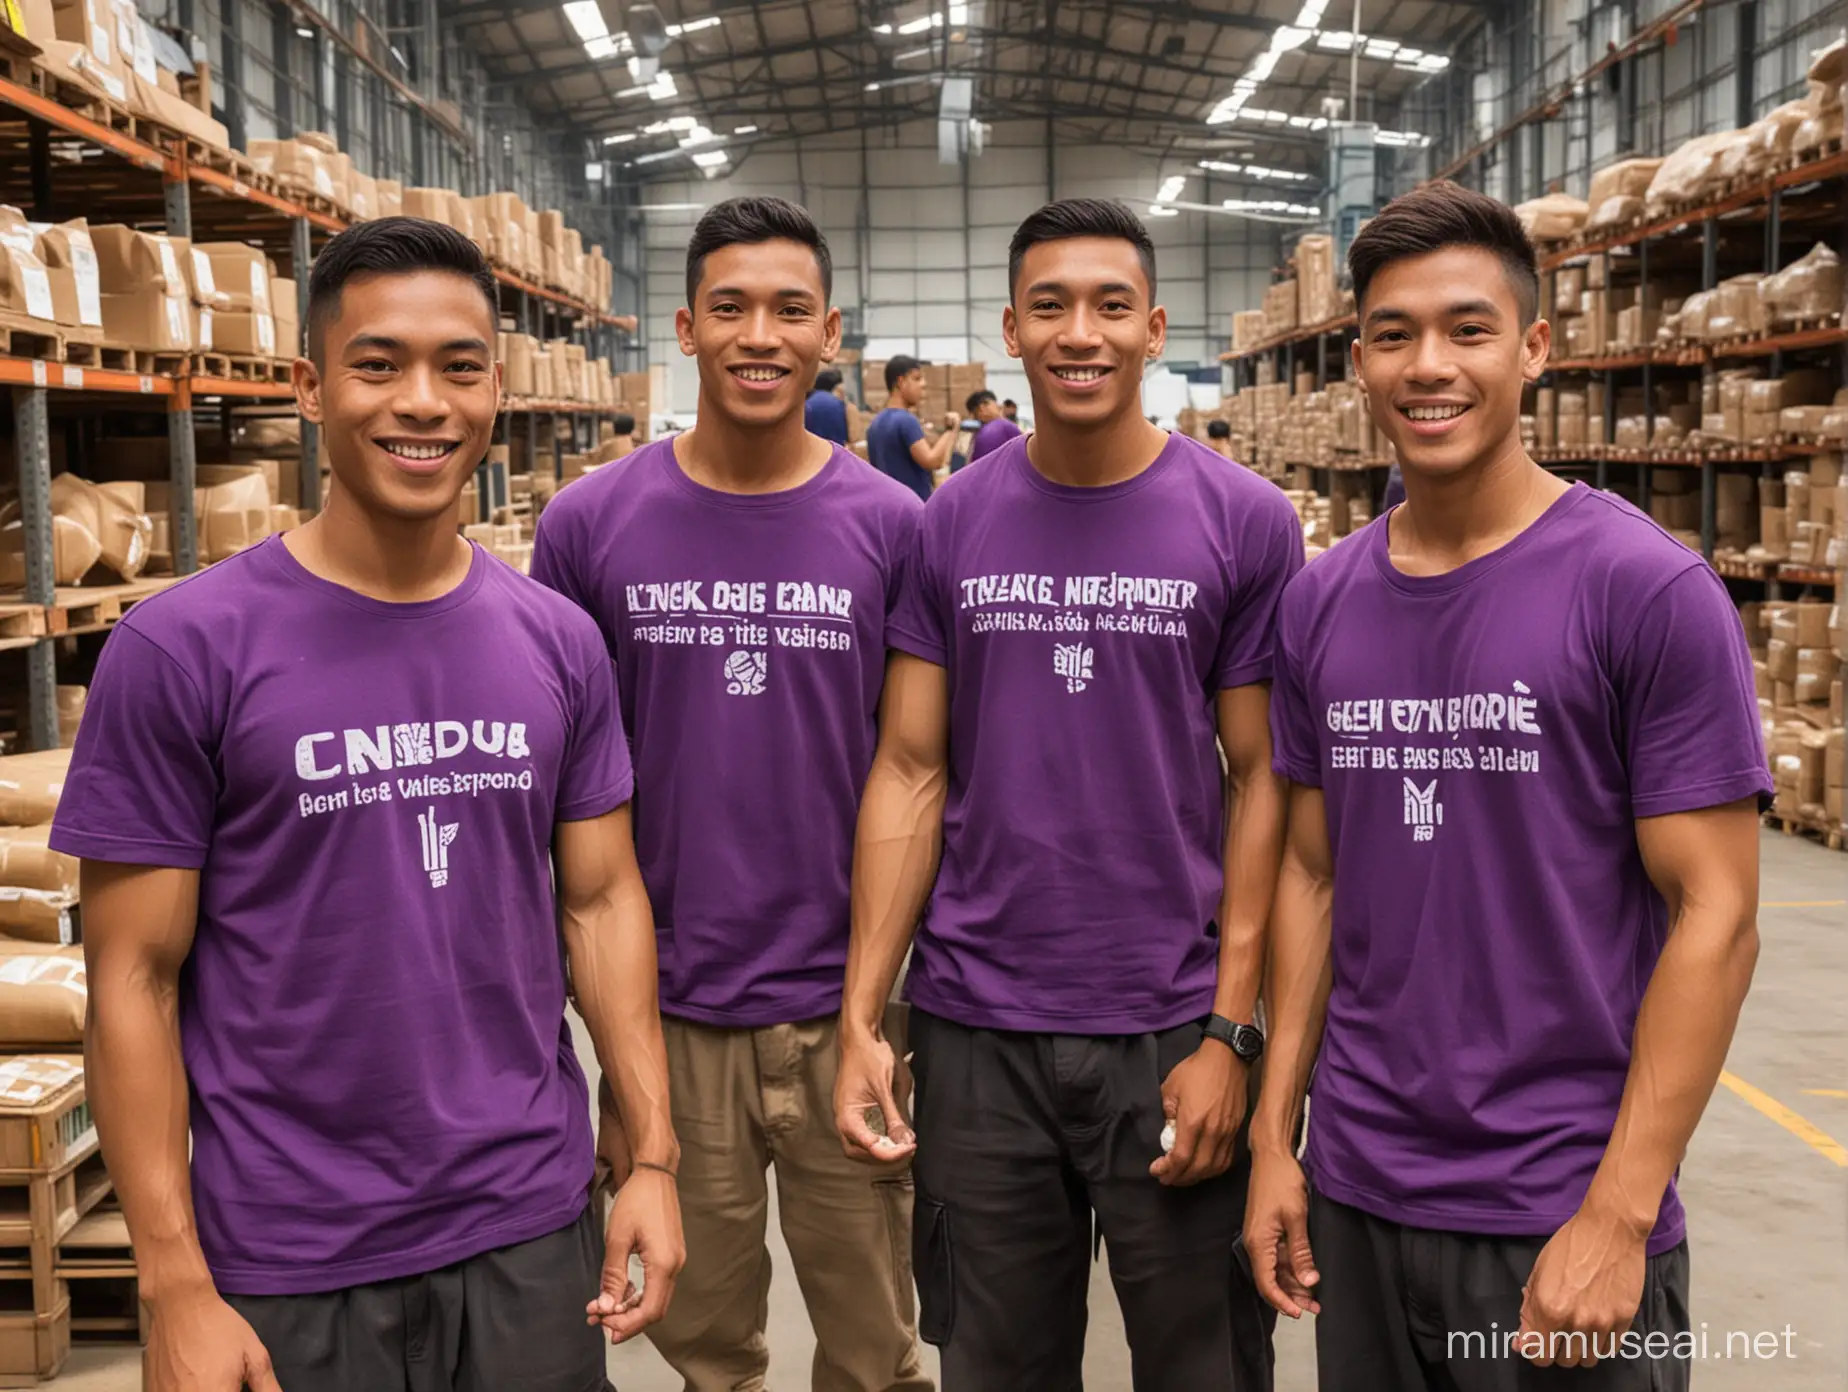 Empat orang laki laki usia 25 tahunan, wajah bersih, asli indonesia, memakai seragam kaos warna ungu...
Sibuk aktifitas di sebuah gudang besar , ada jahe, ada kunyit